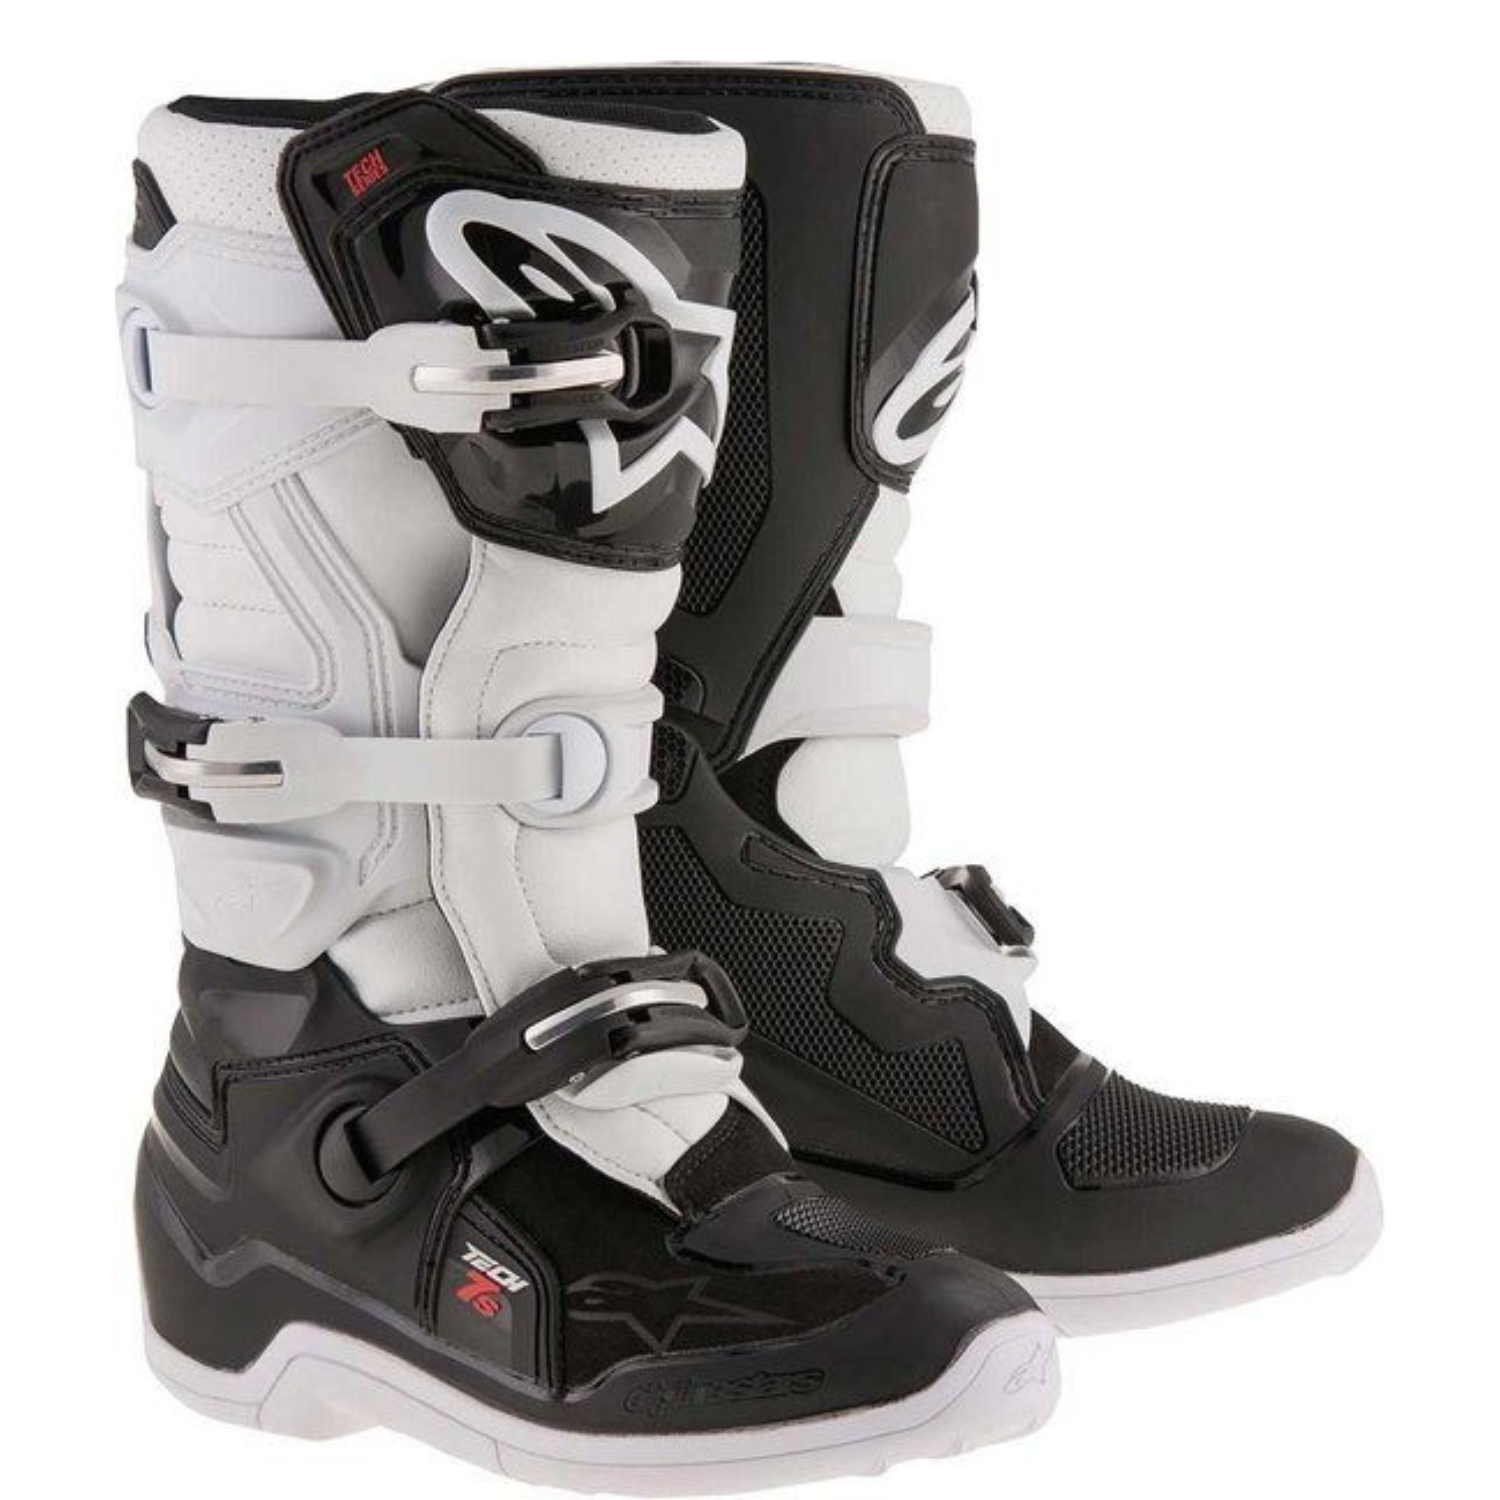 Image of Alpinestars Tech 7 S Black White Boots Talla US 8